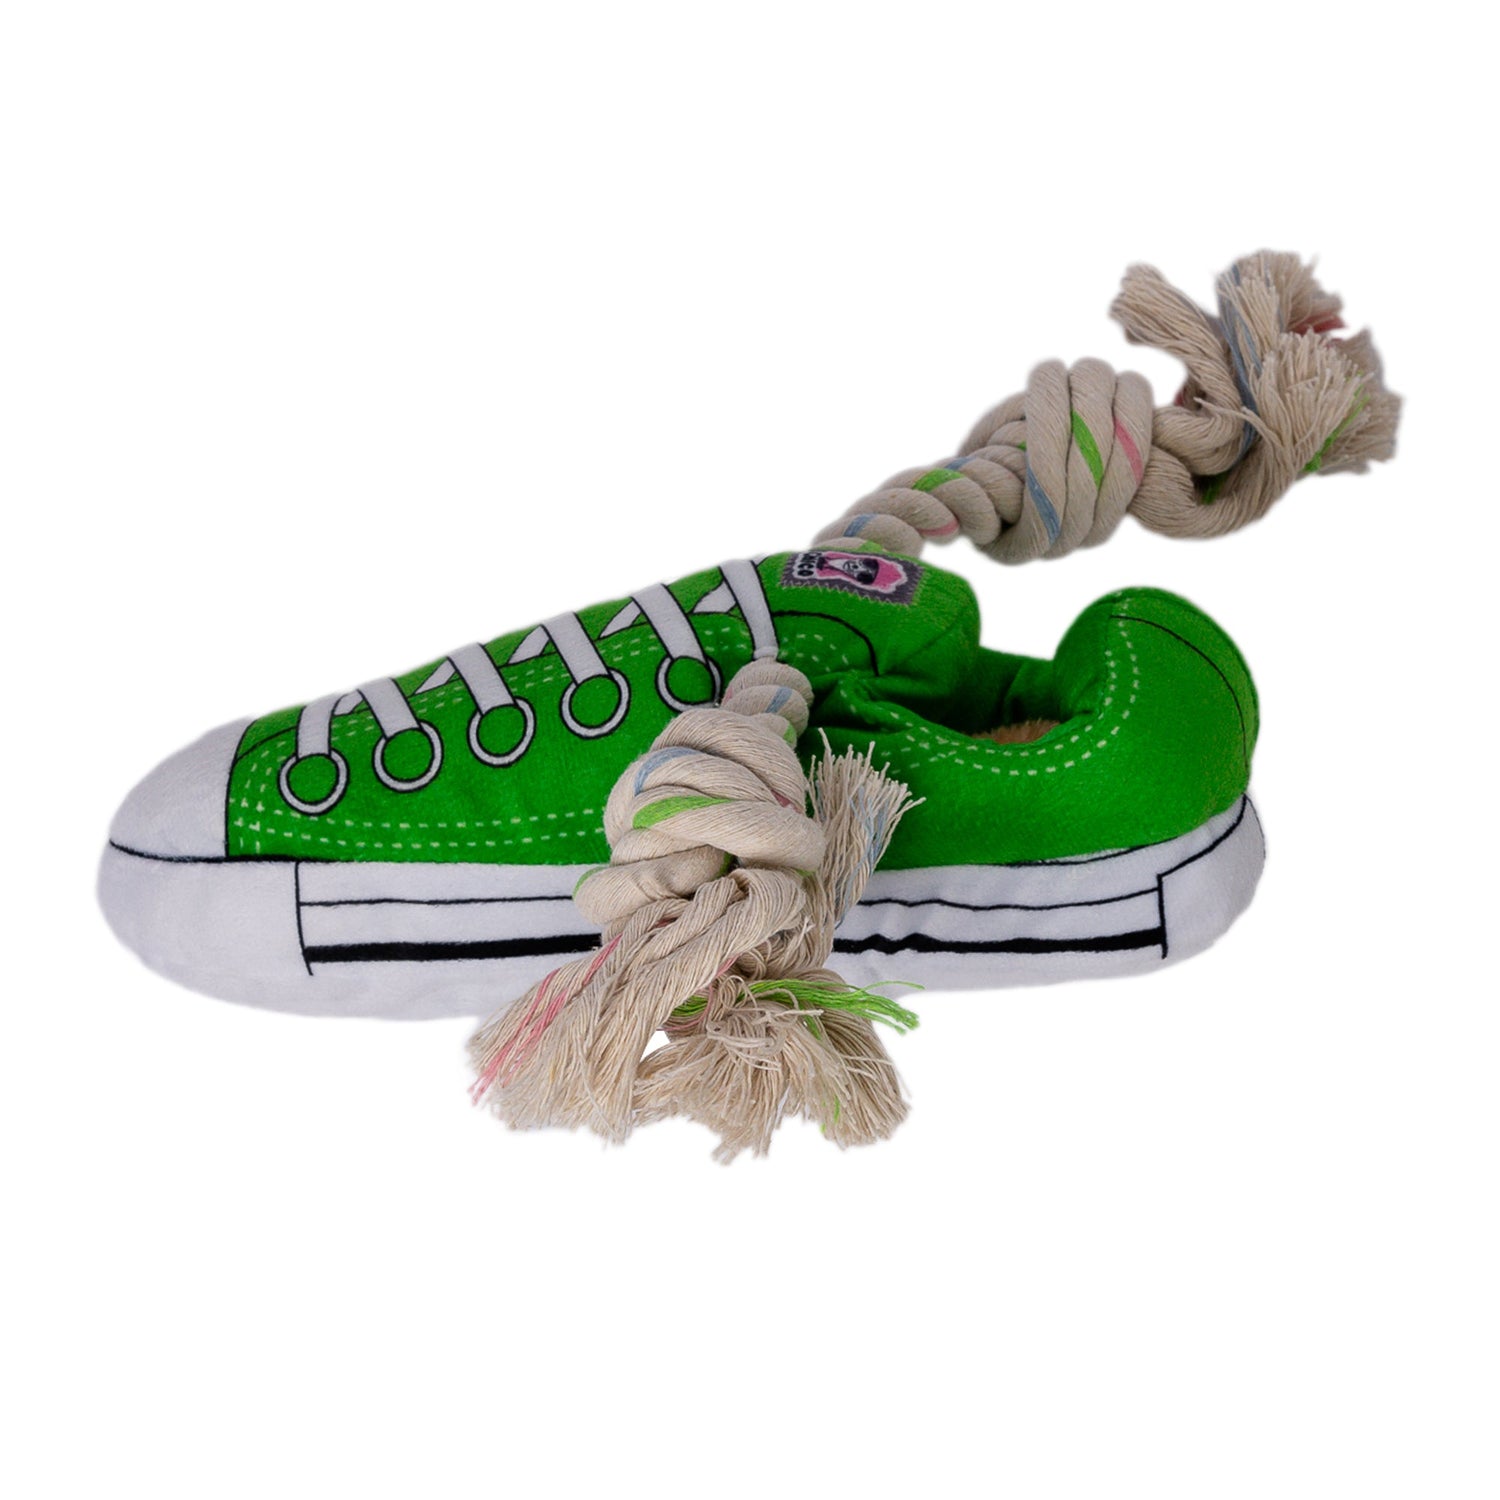 Squeaking Comfort Plush Sneaker Dog Toy - Green-4